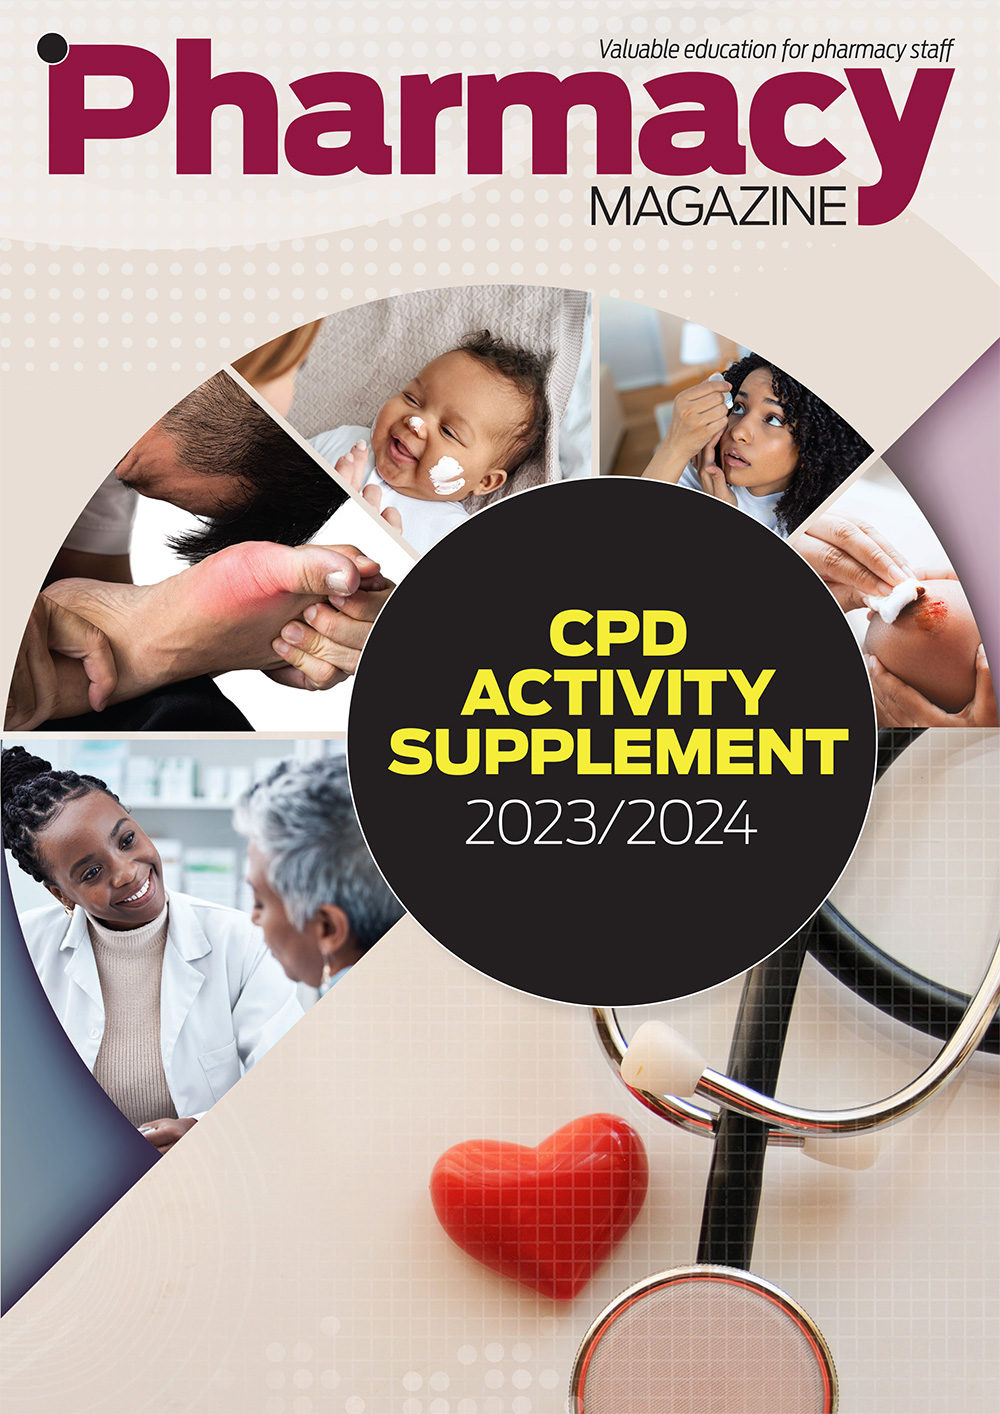 Pharmacy-Magazine_2023-24-CPD-Activity-Cover